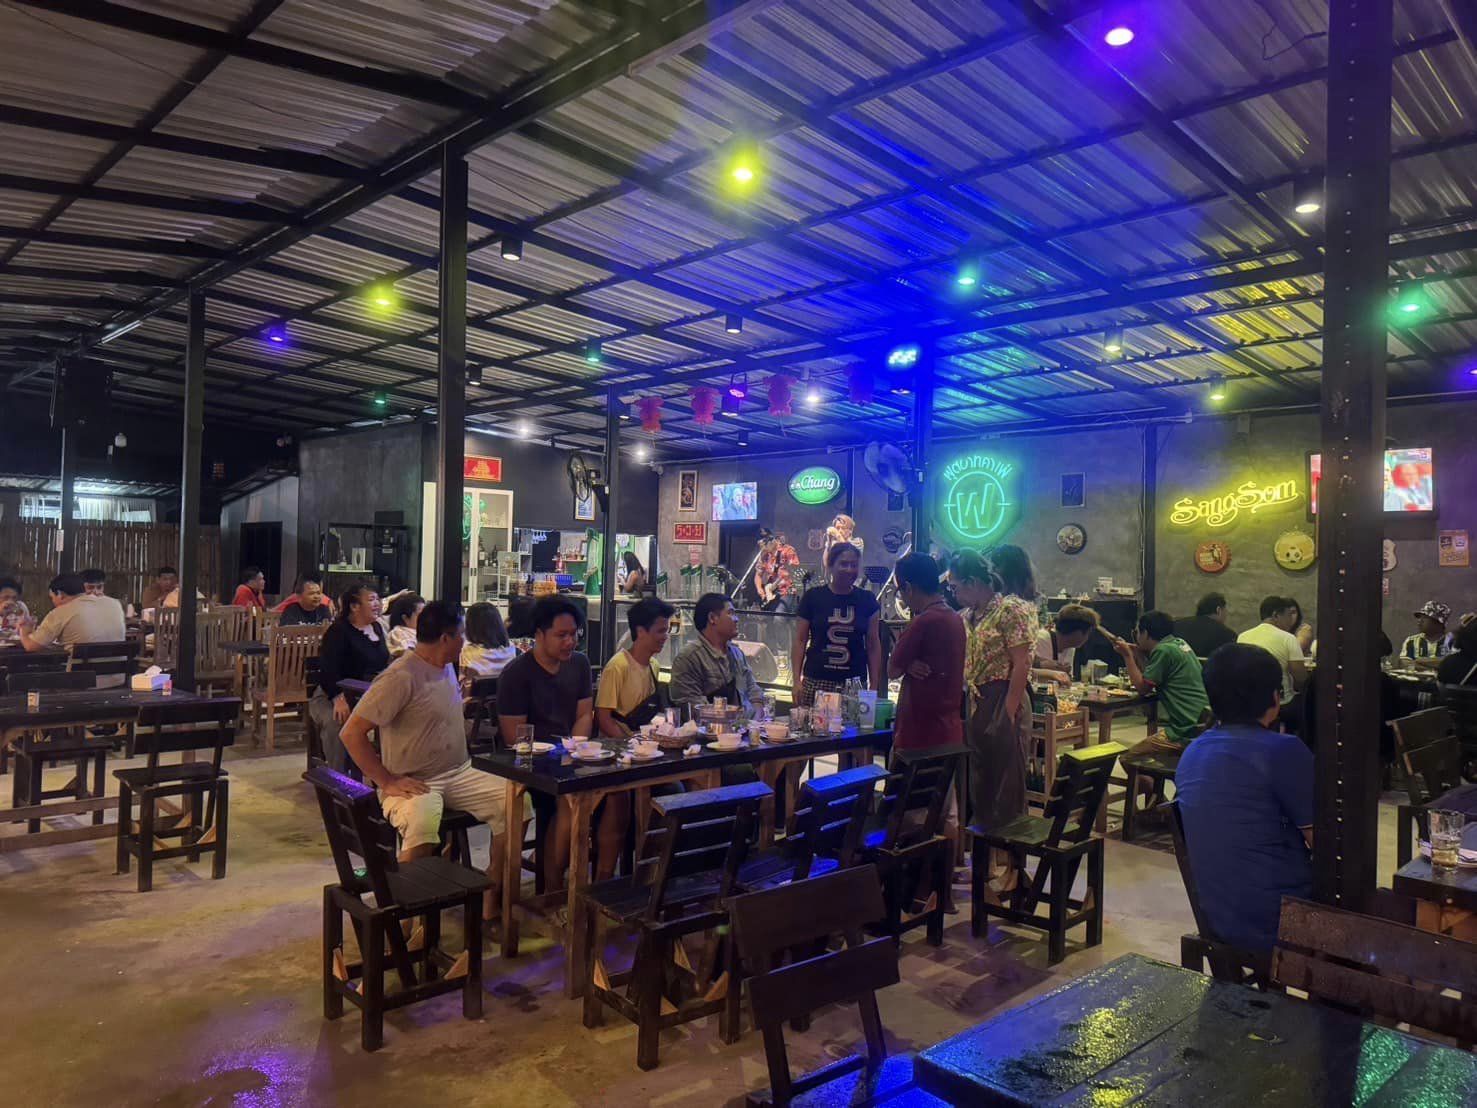 Footbath Cafe (ฟุตบาท คาเฟ่) : Chiang Rai (เชียงราย)